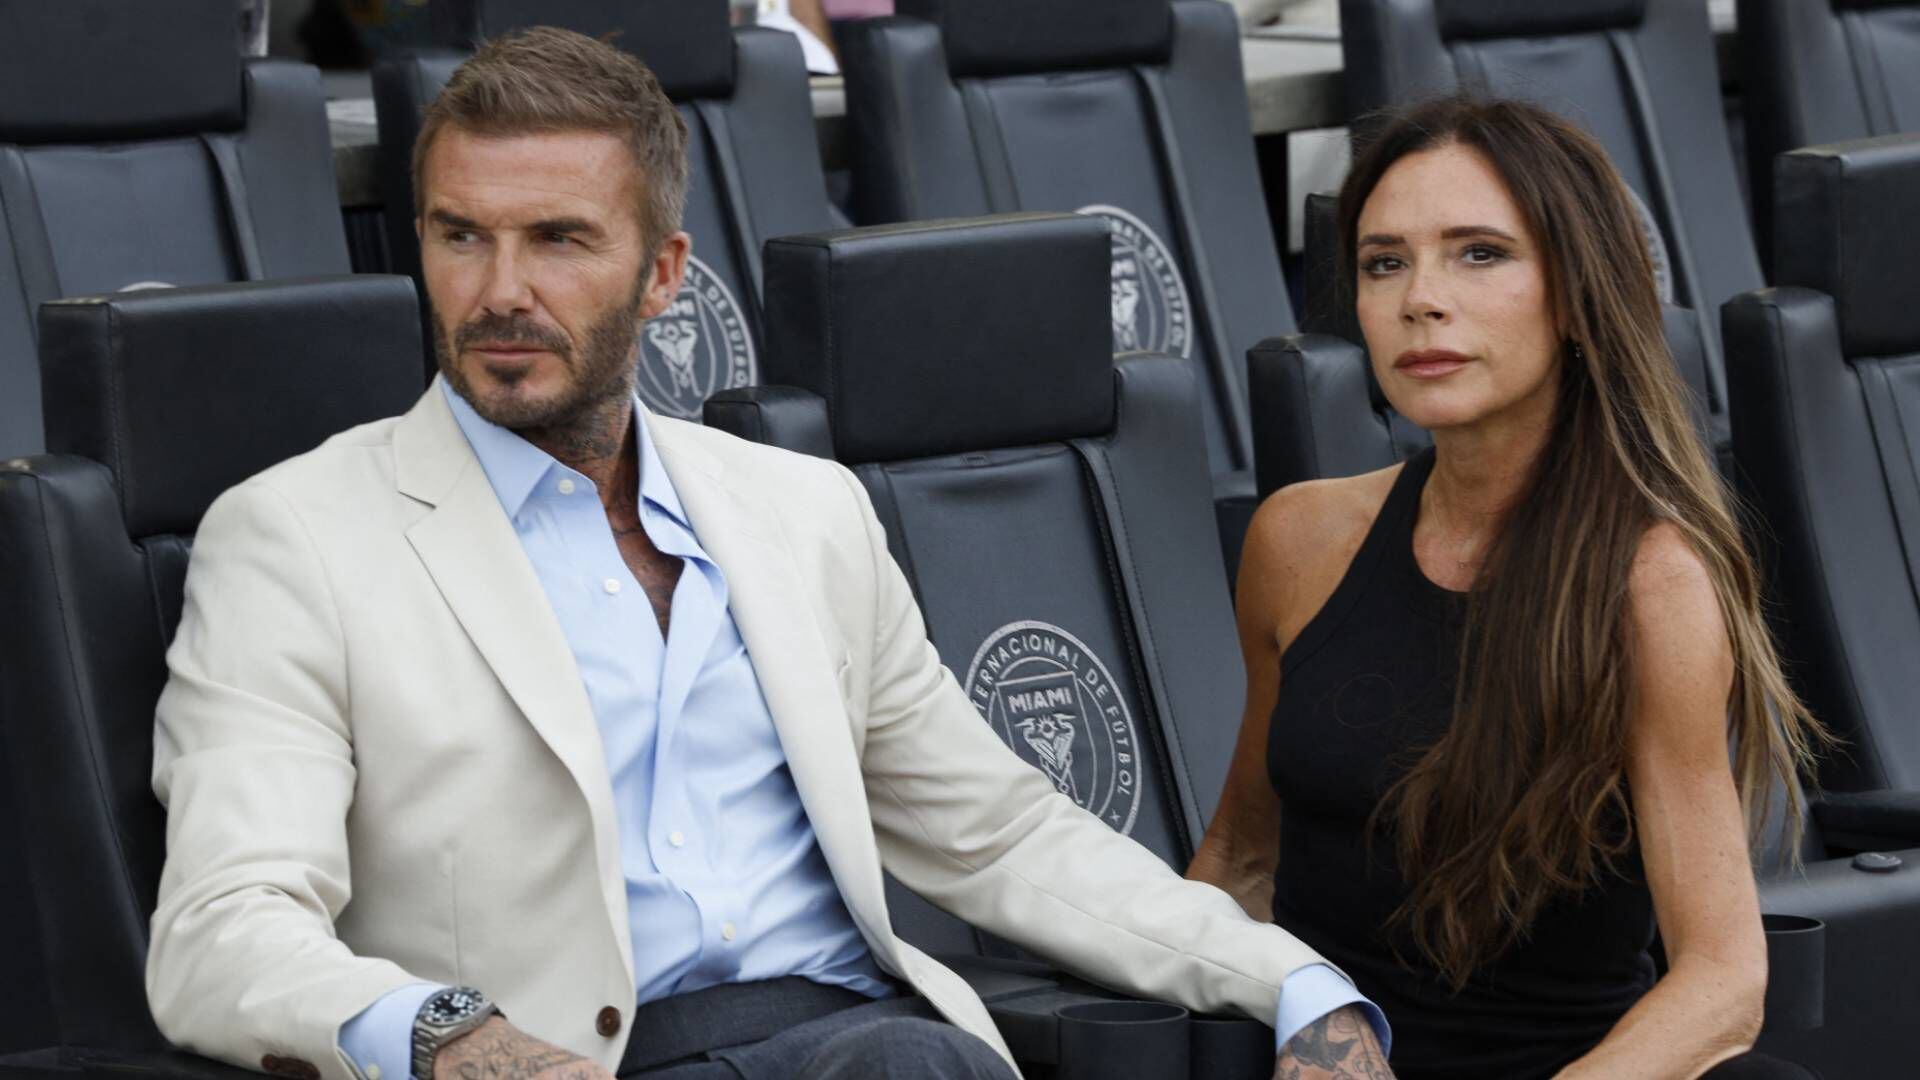 David Beckham - Victoria Beckham